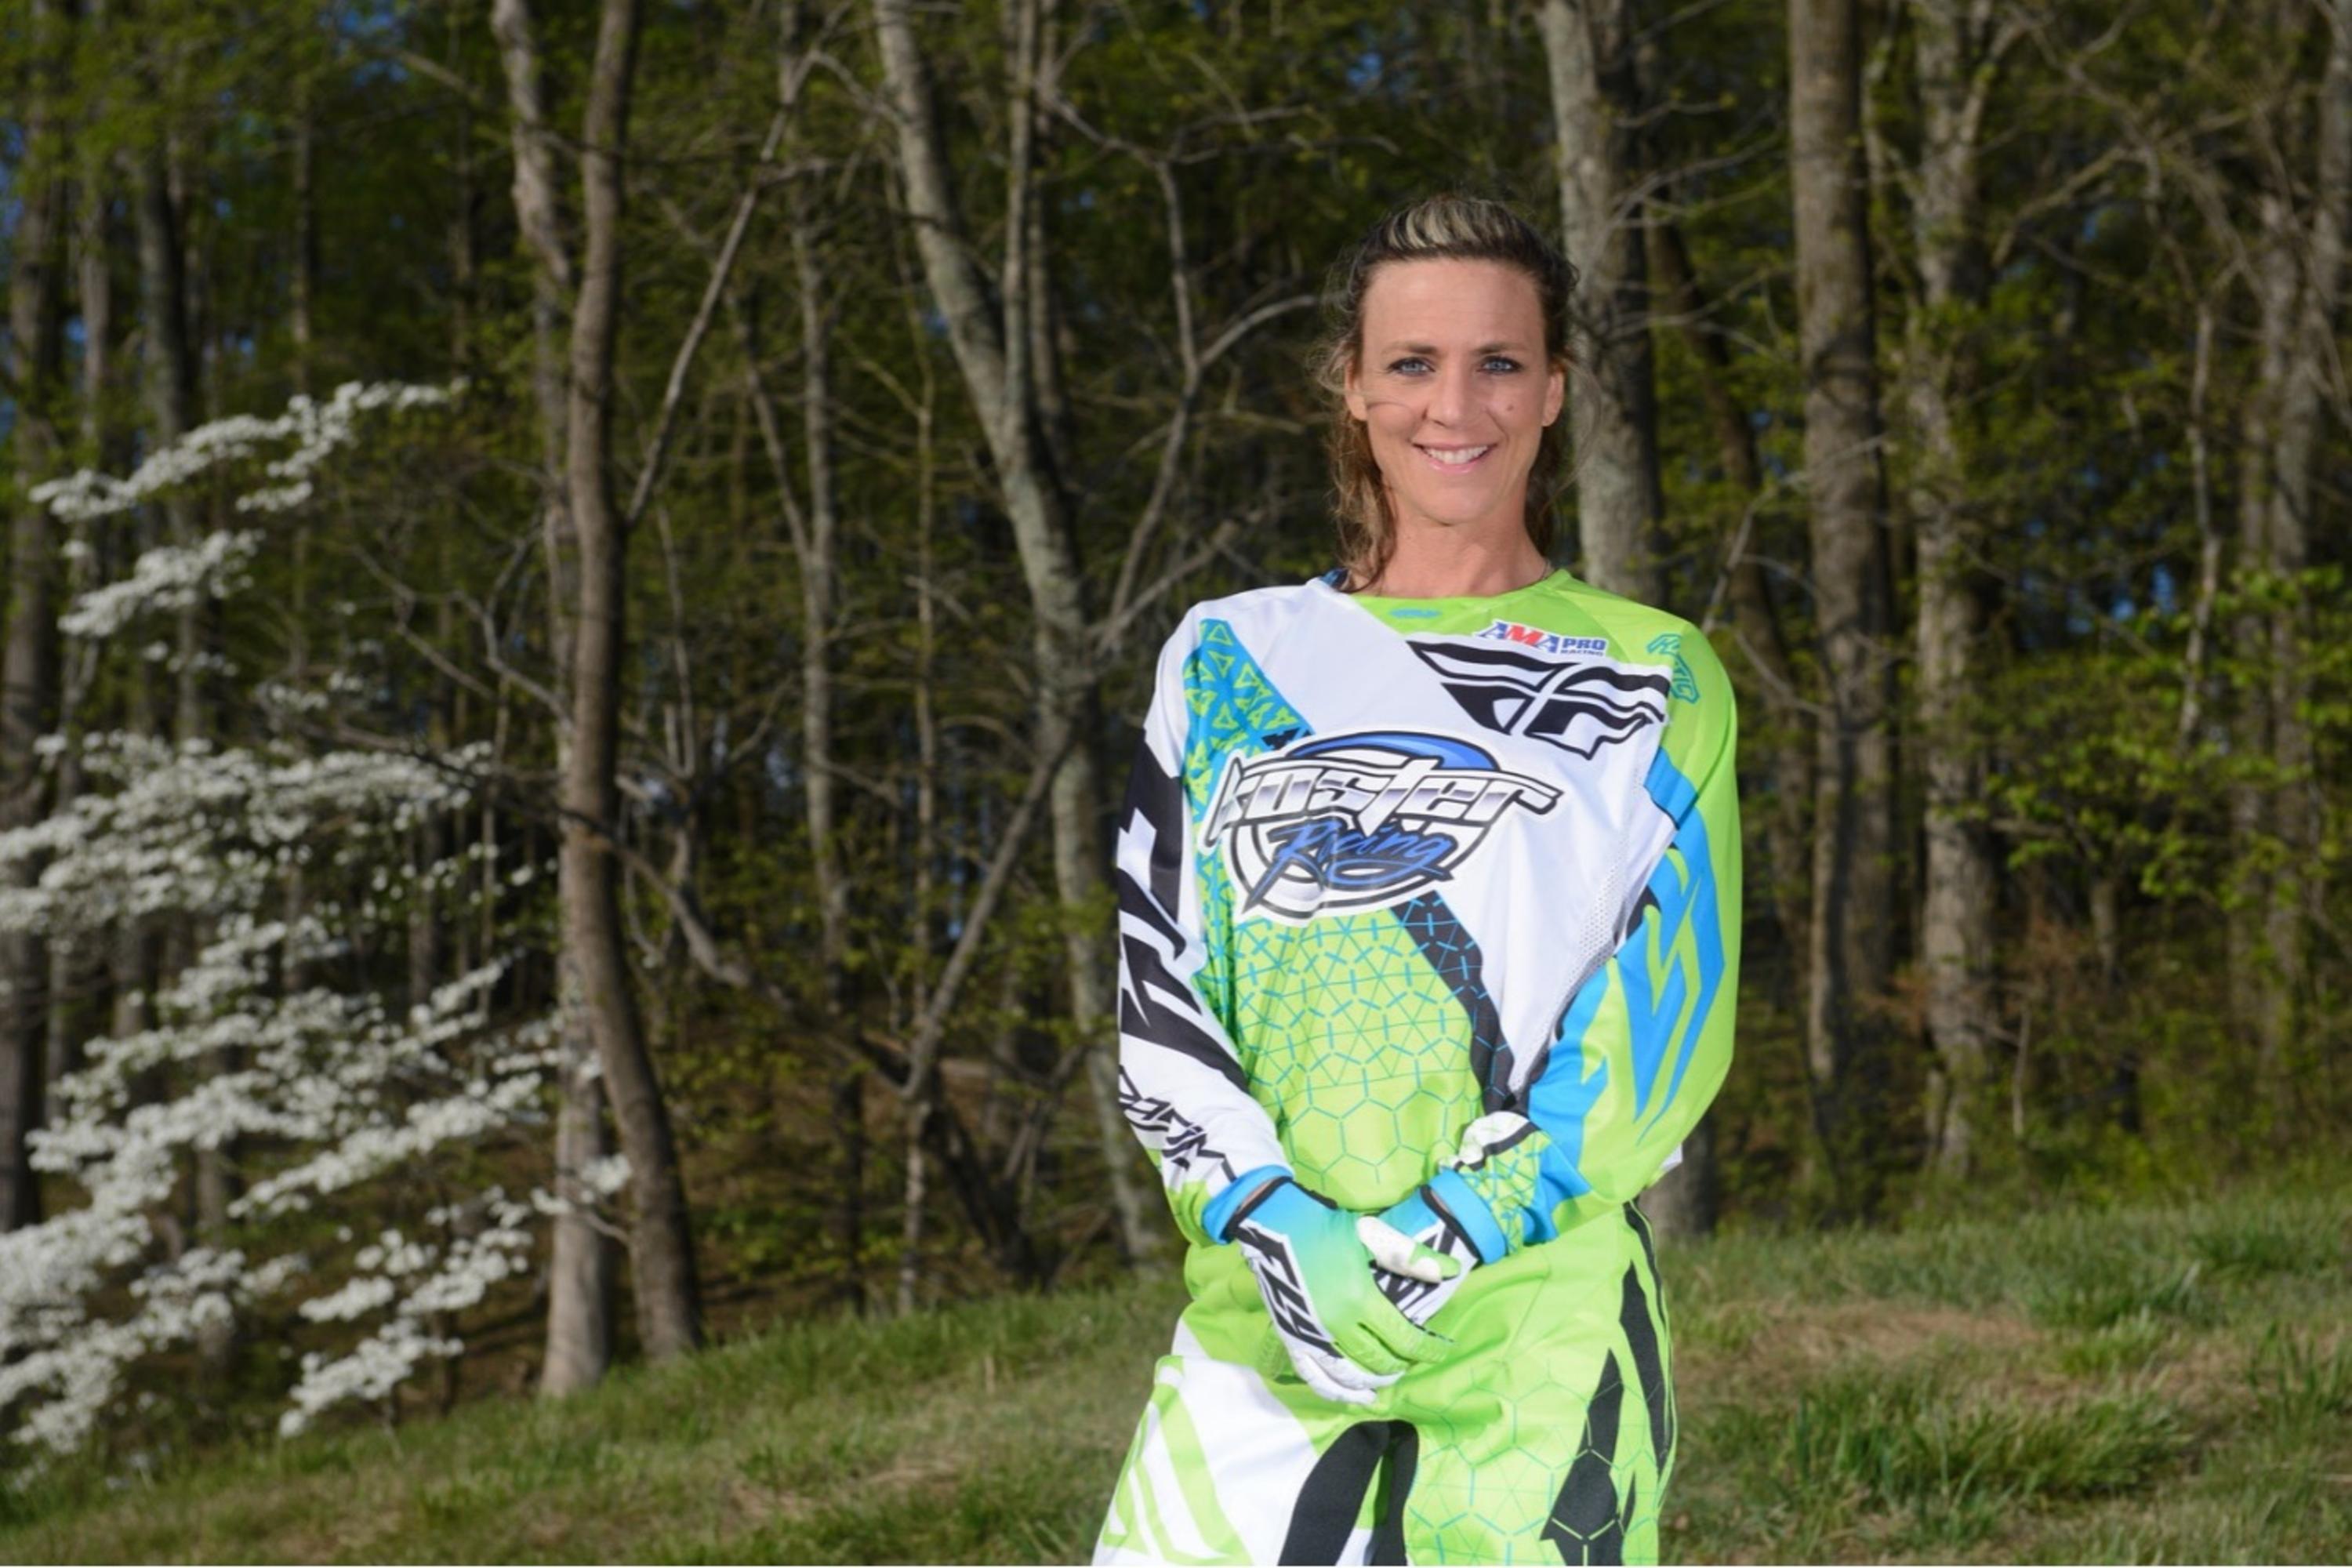 ATVMX Community Saddened by the Sudden Loss of Racer, Michelle Jenkins